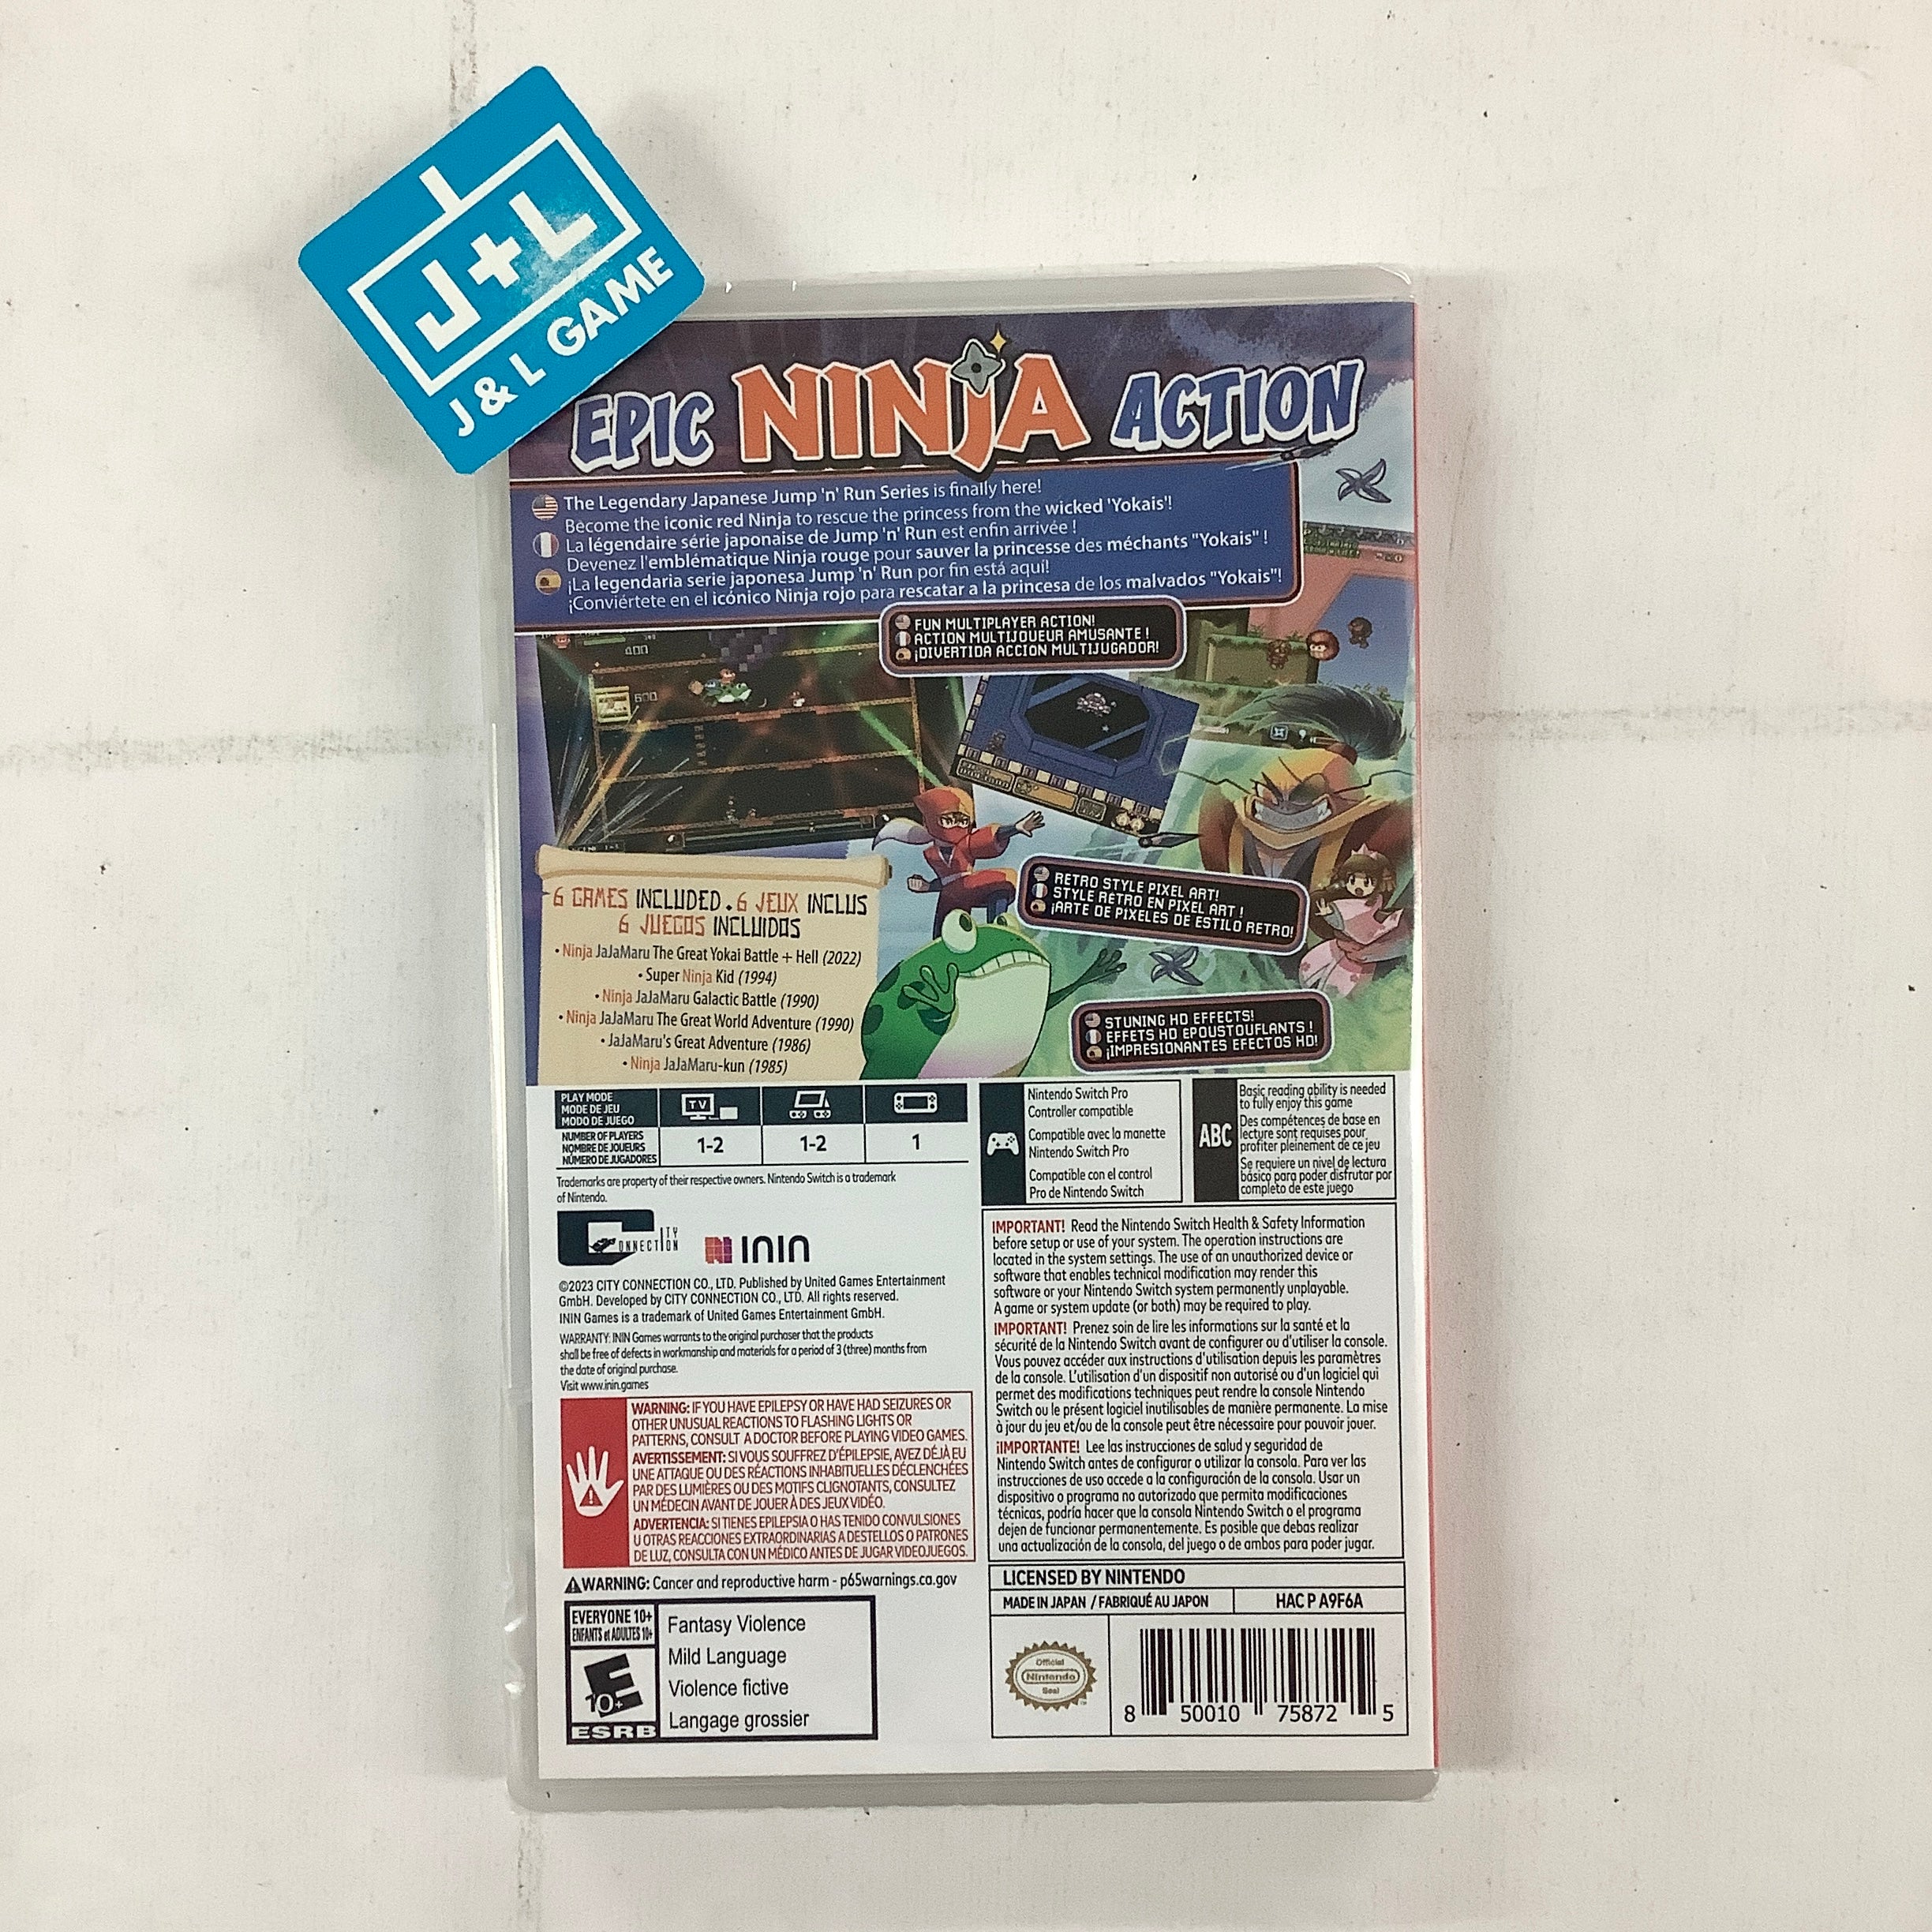 Ninja JaJaMaru: The Great Yokai Battle +Hell (Deluxe Edition) - (NSW) Nintendo Switch Video Games ININ   